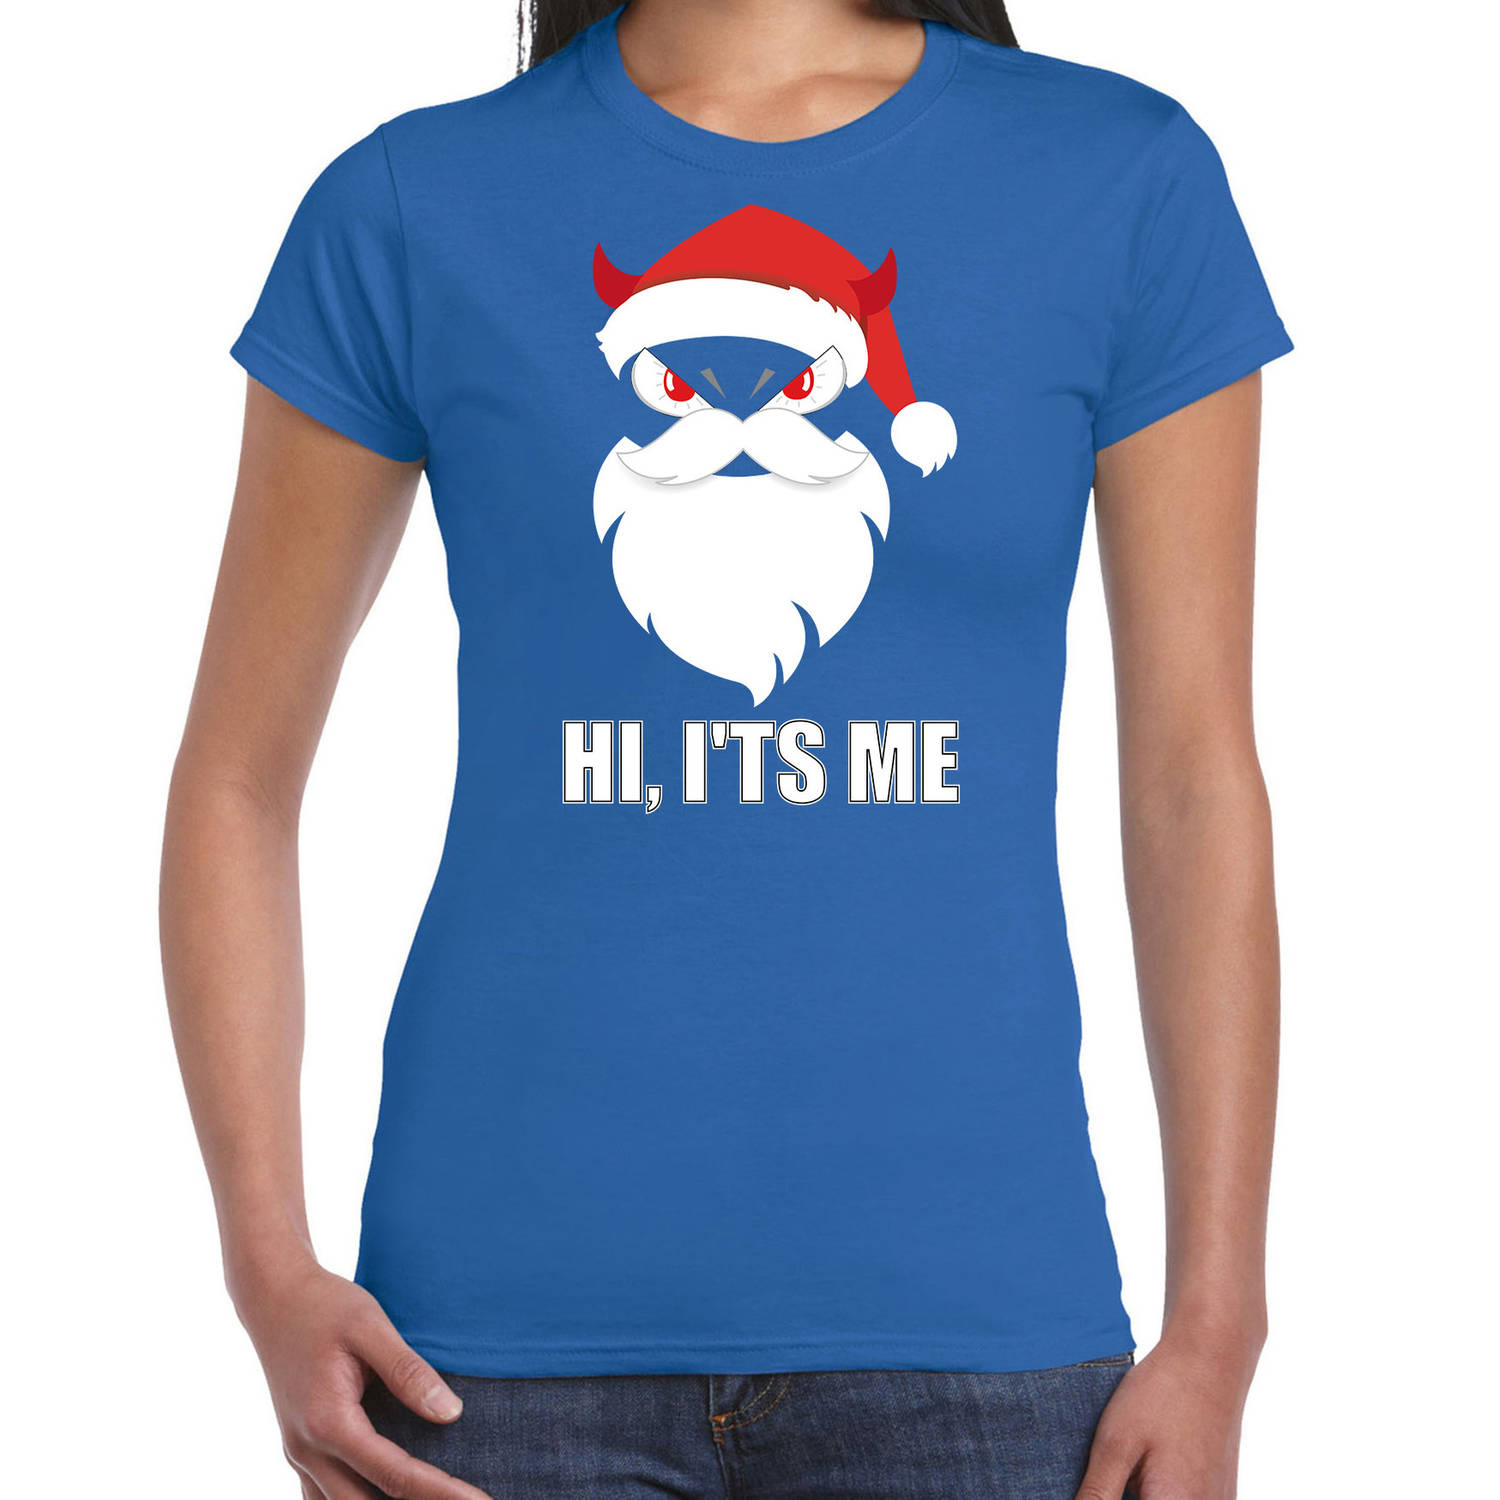 Blauw Kerstshirt / Kerstkleding Hi its me voor dames met duivels kerstmannetje 2XL - kerst t-shirts